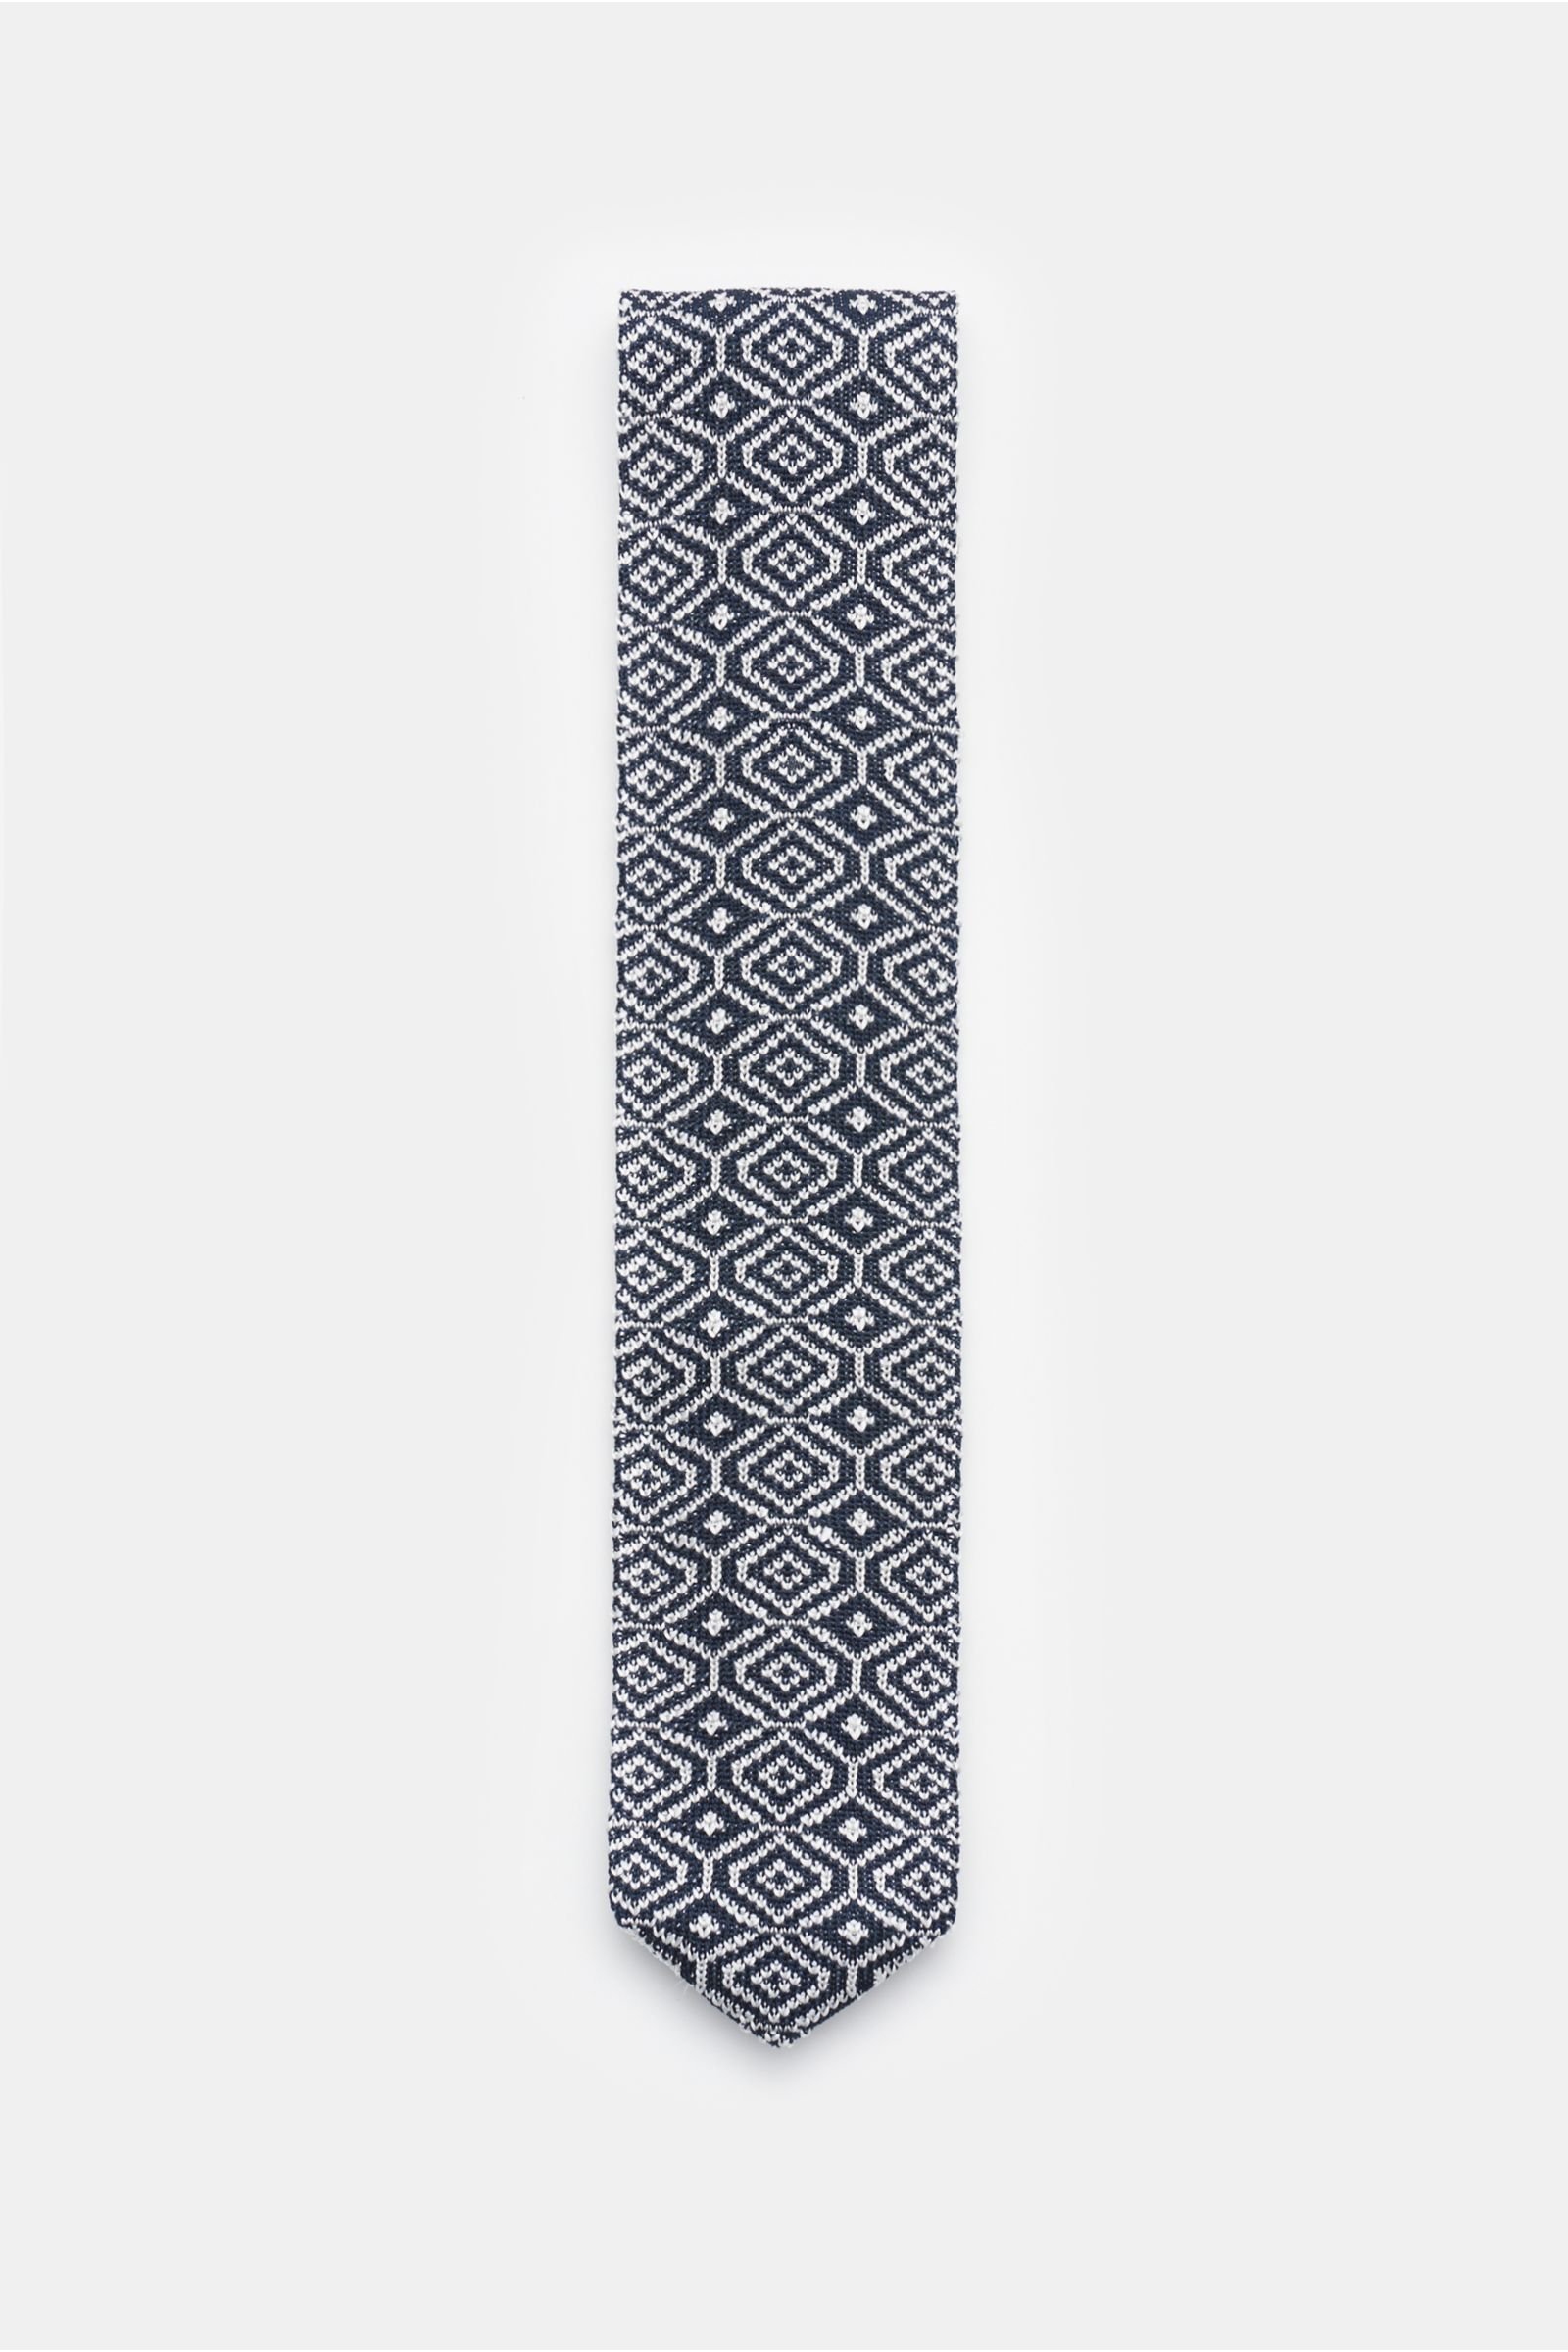 STILE LATINO silk knit tie navy/white patterned | BRAUN Hamburg